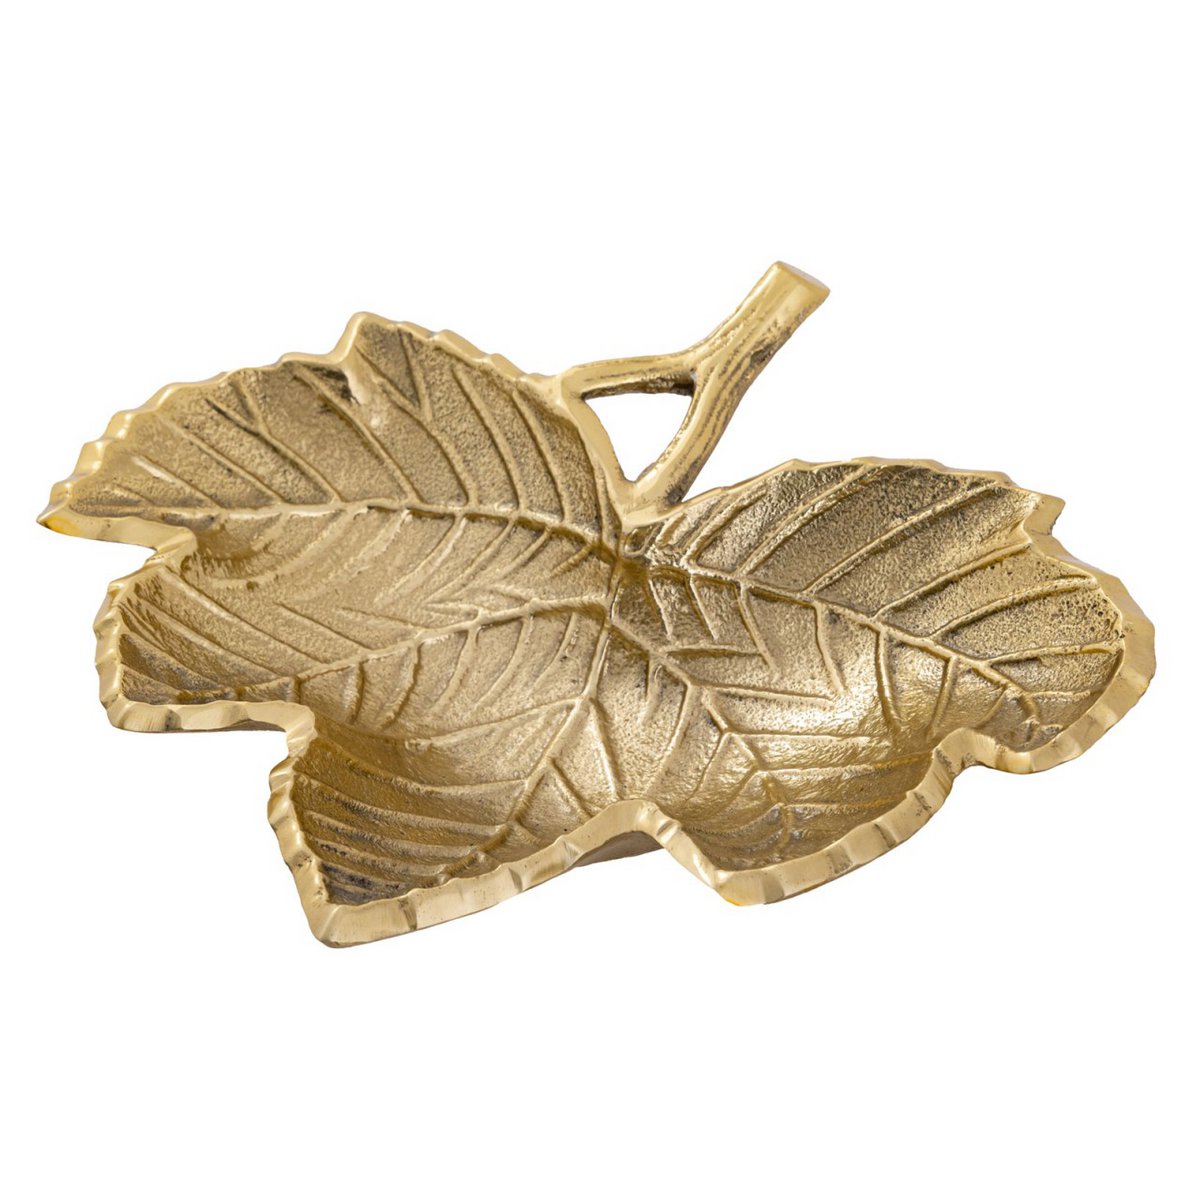 Dekoschale Blatt Masterbox 18-teilig Schale Aluminium Leaf gold o. silber Blattschale variant: silber